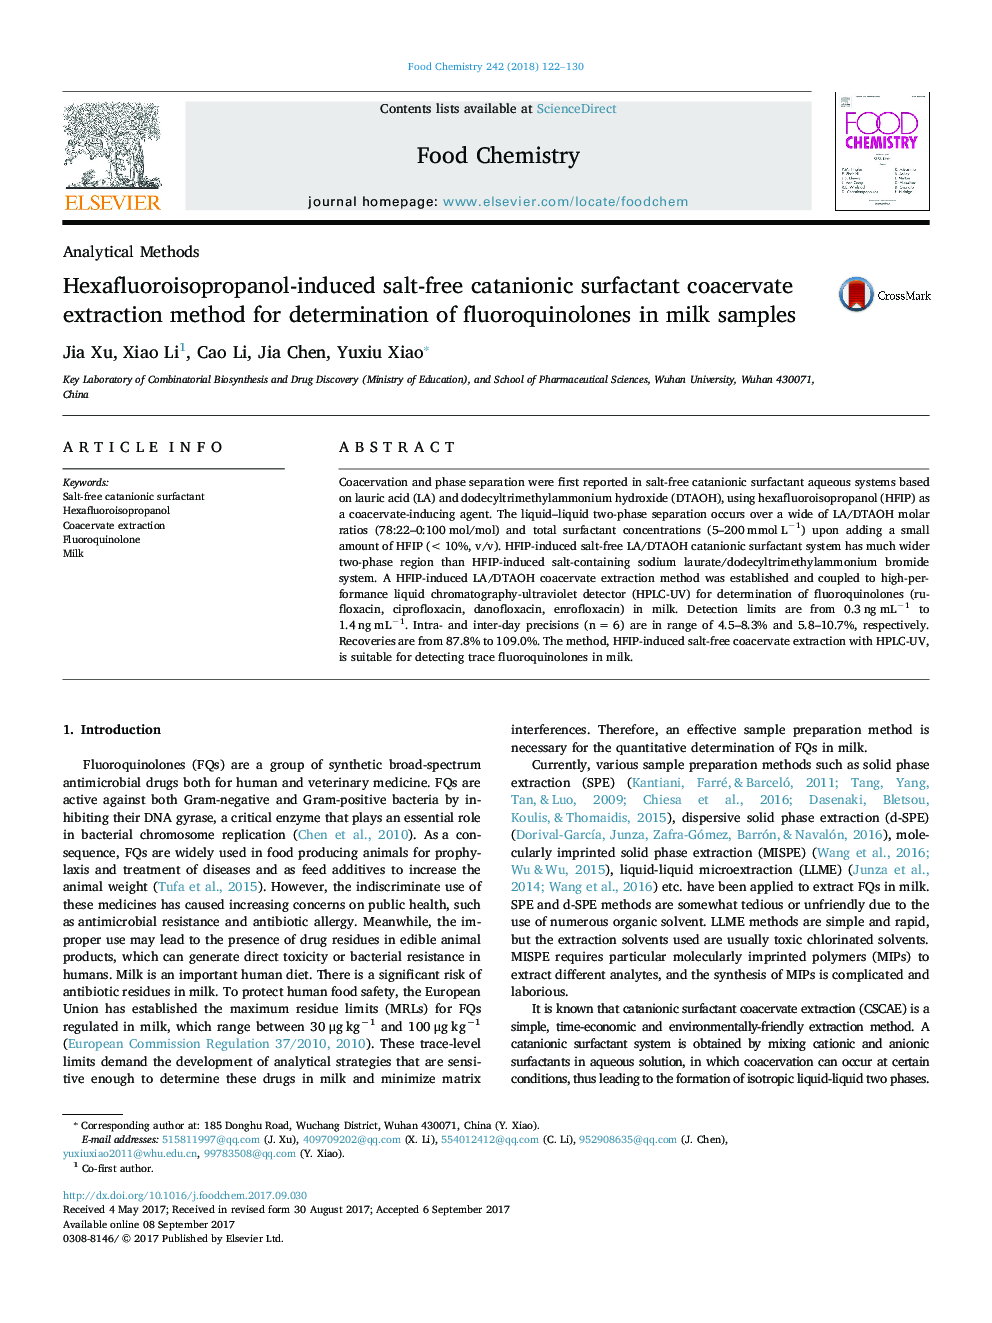 Hexafluoroisopropanol-induced salt-free catanionic surfactant coacervate extraction method for determination of fluoroquinolones in milk samples